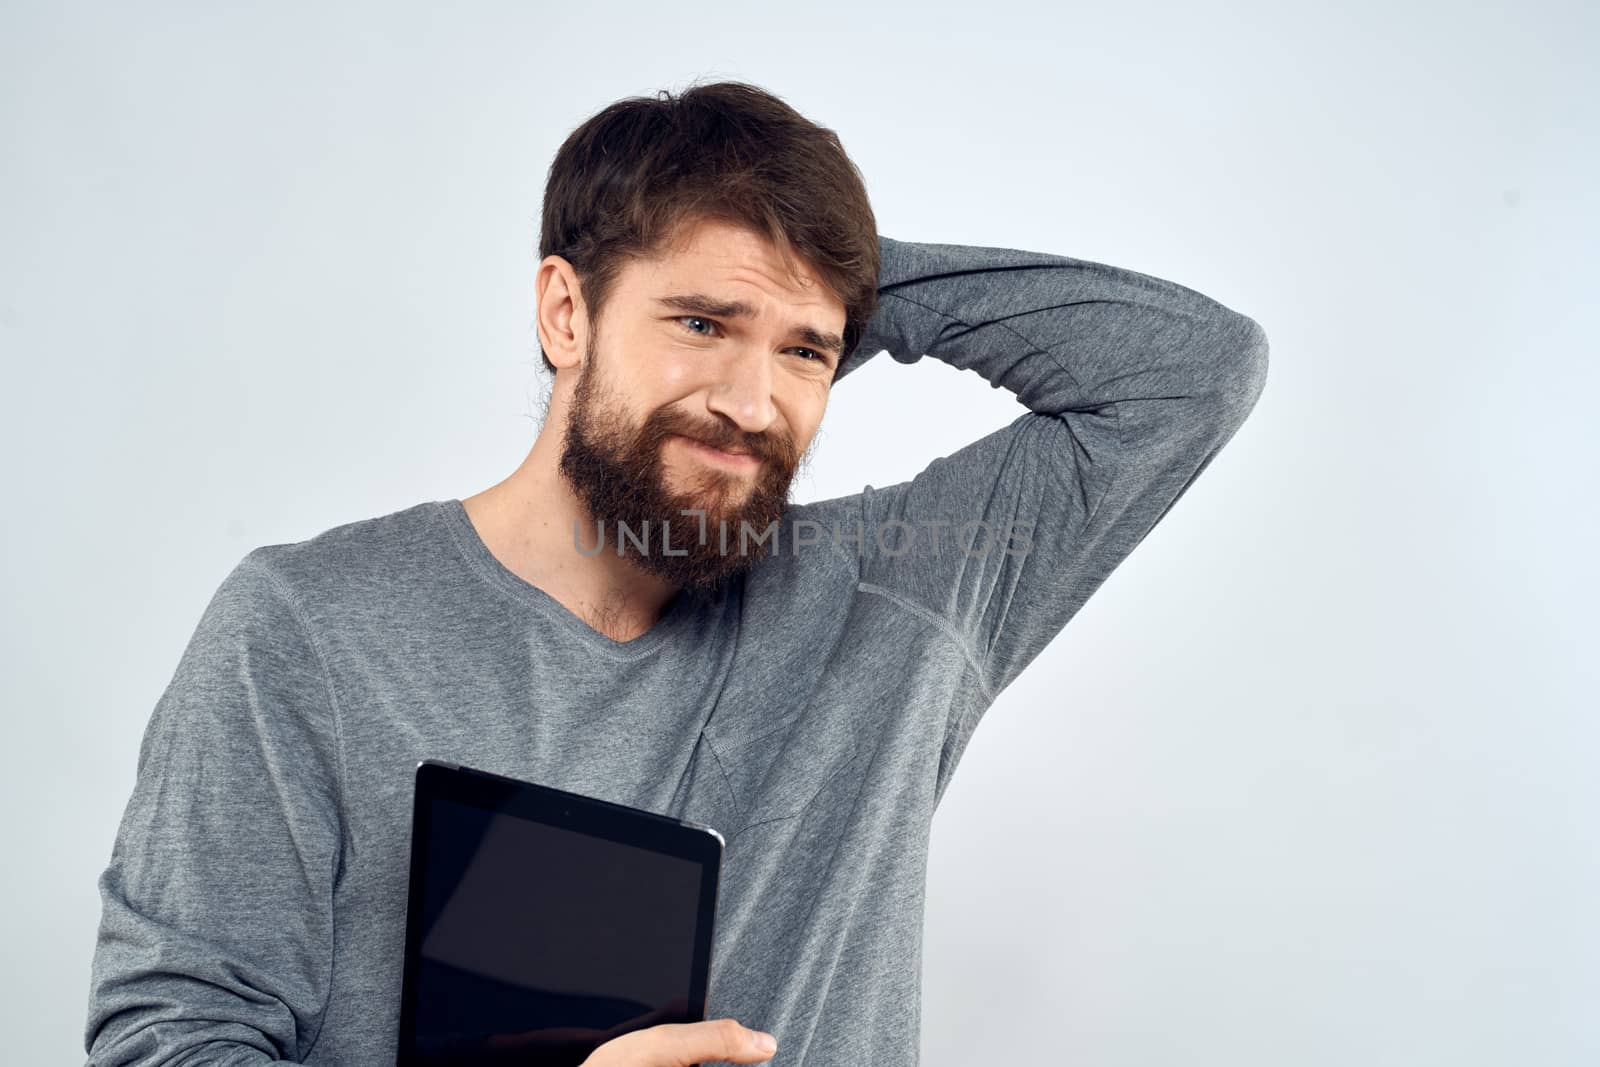 emotional man holding tablet technology communication internet work light background by SHOTPRIME